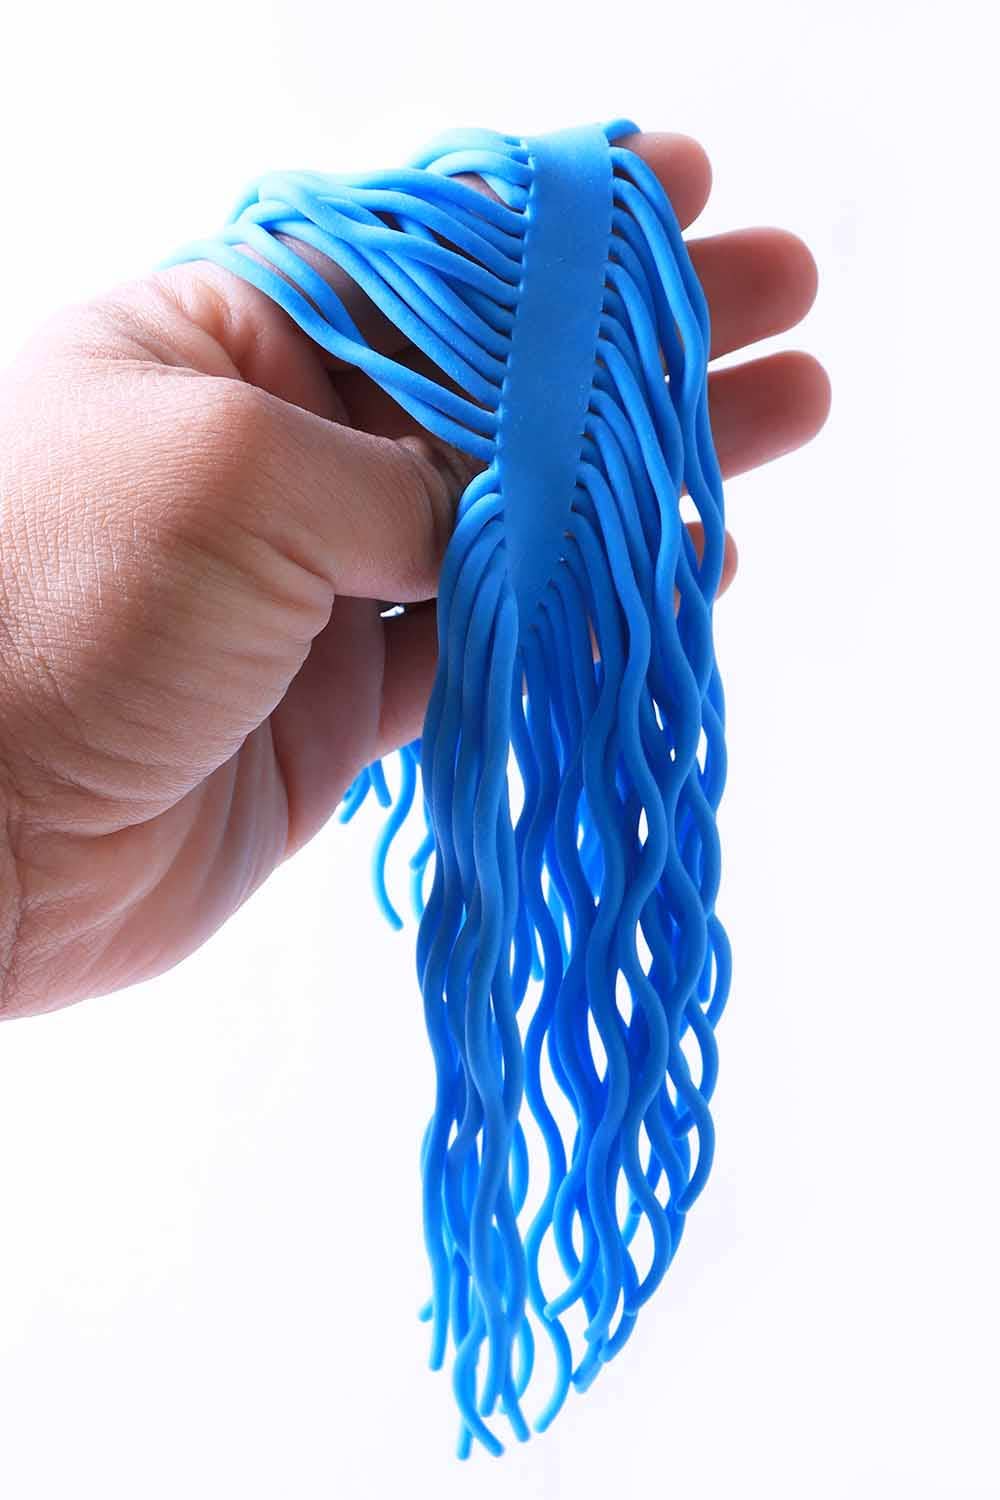 Stretchy String Fidget Toy